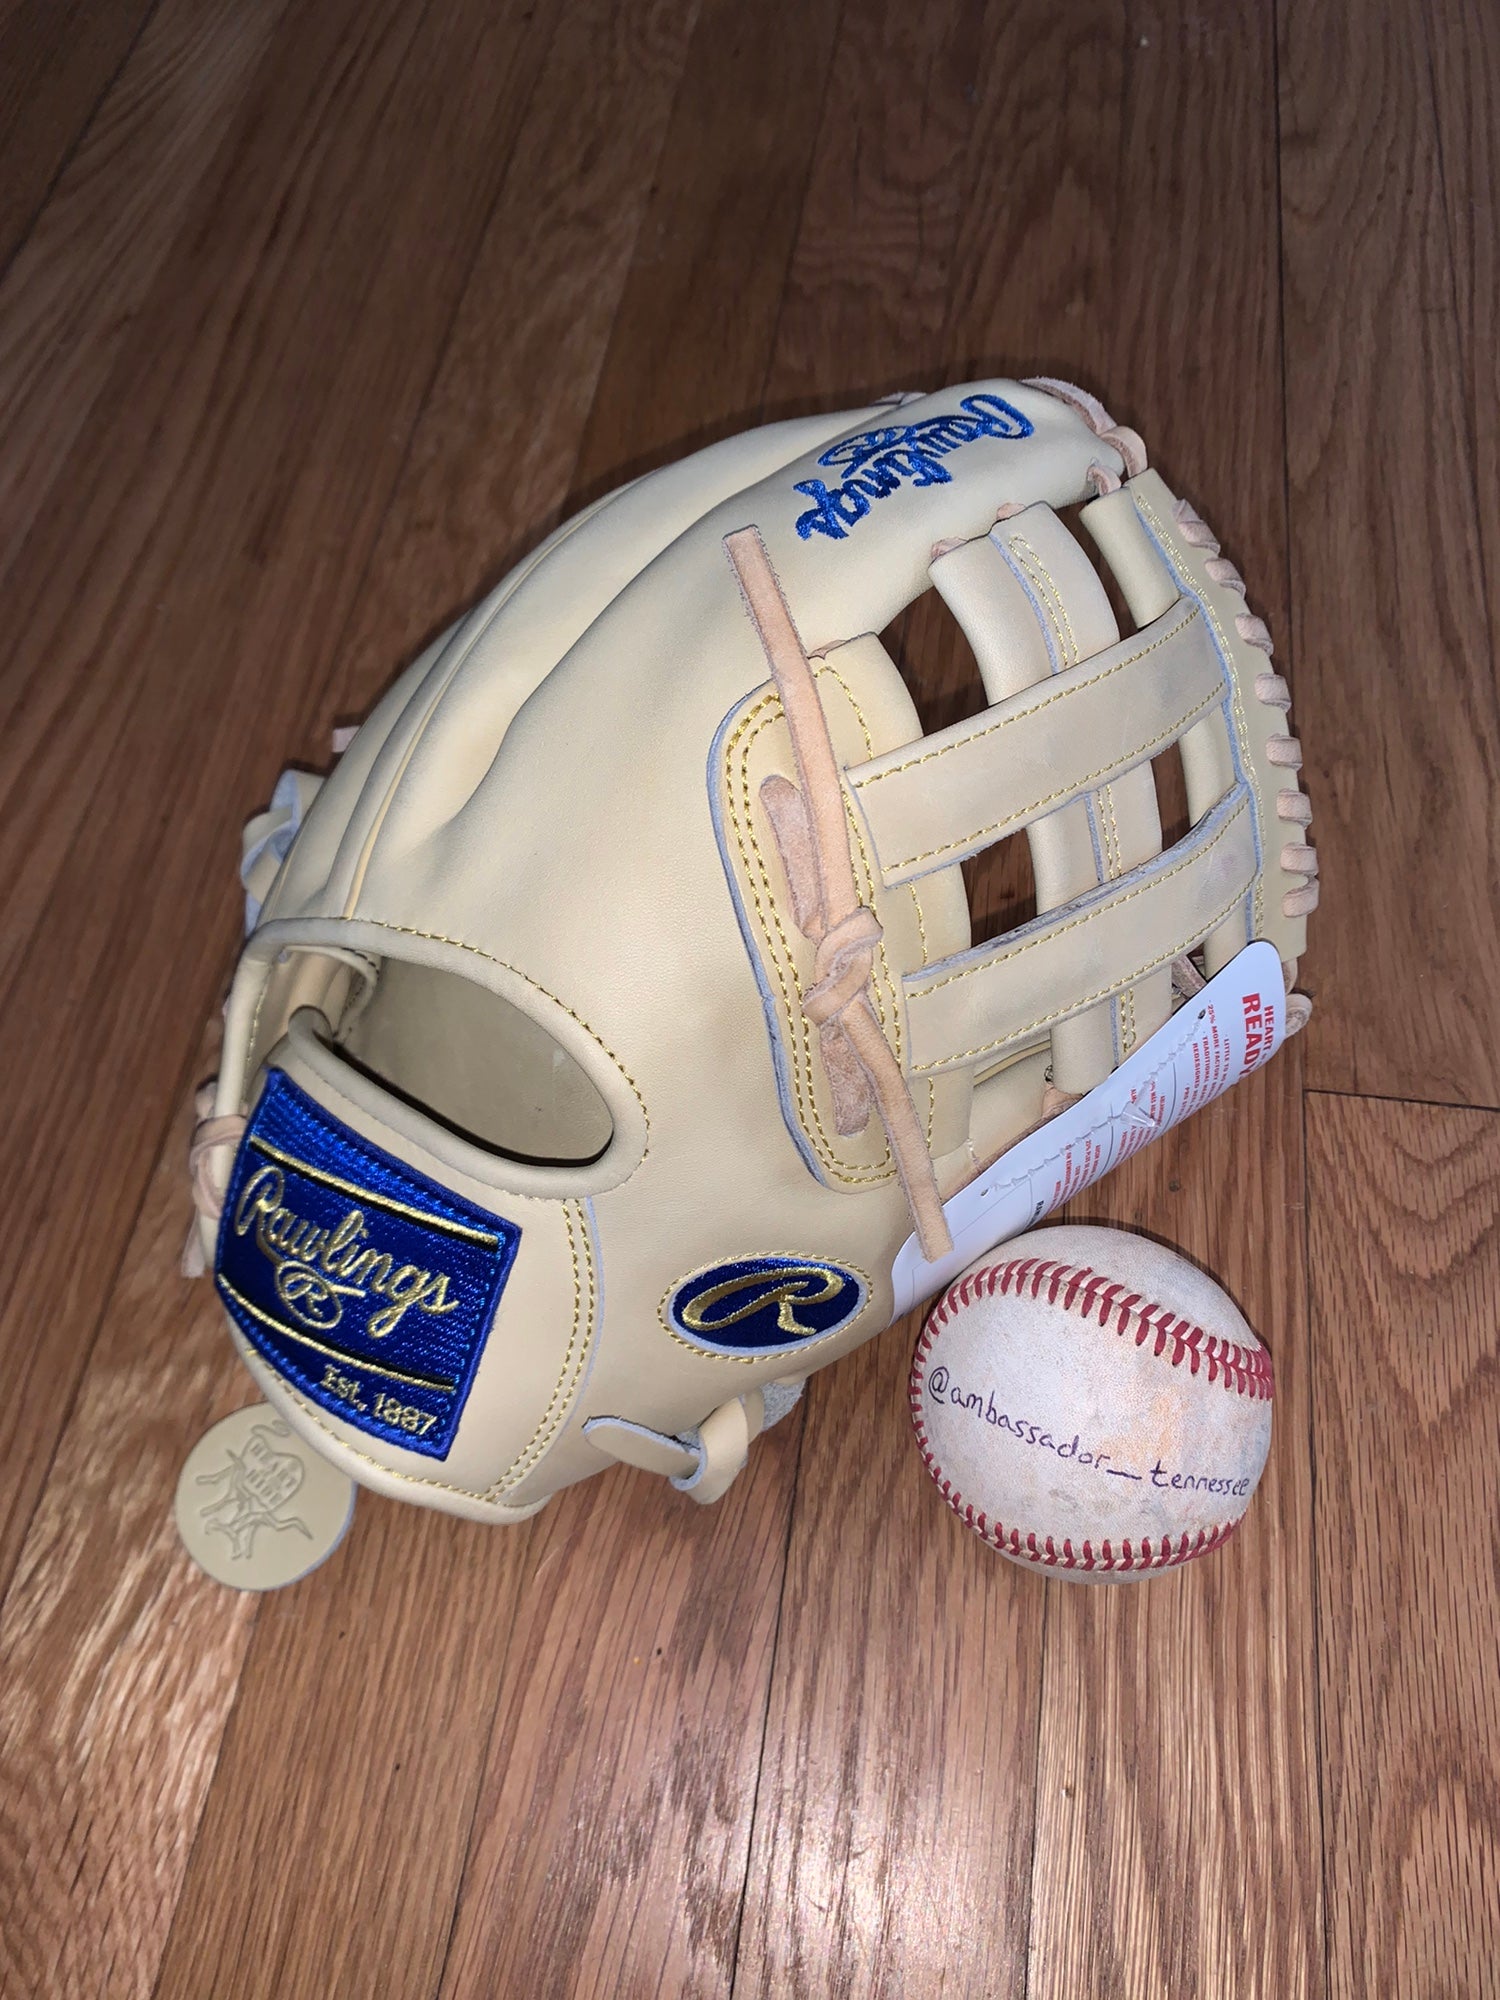 Rawlings Heart of the Hide R2G Kris Bryant 12.25 Baseball Glove (PRORKB17)